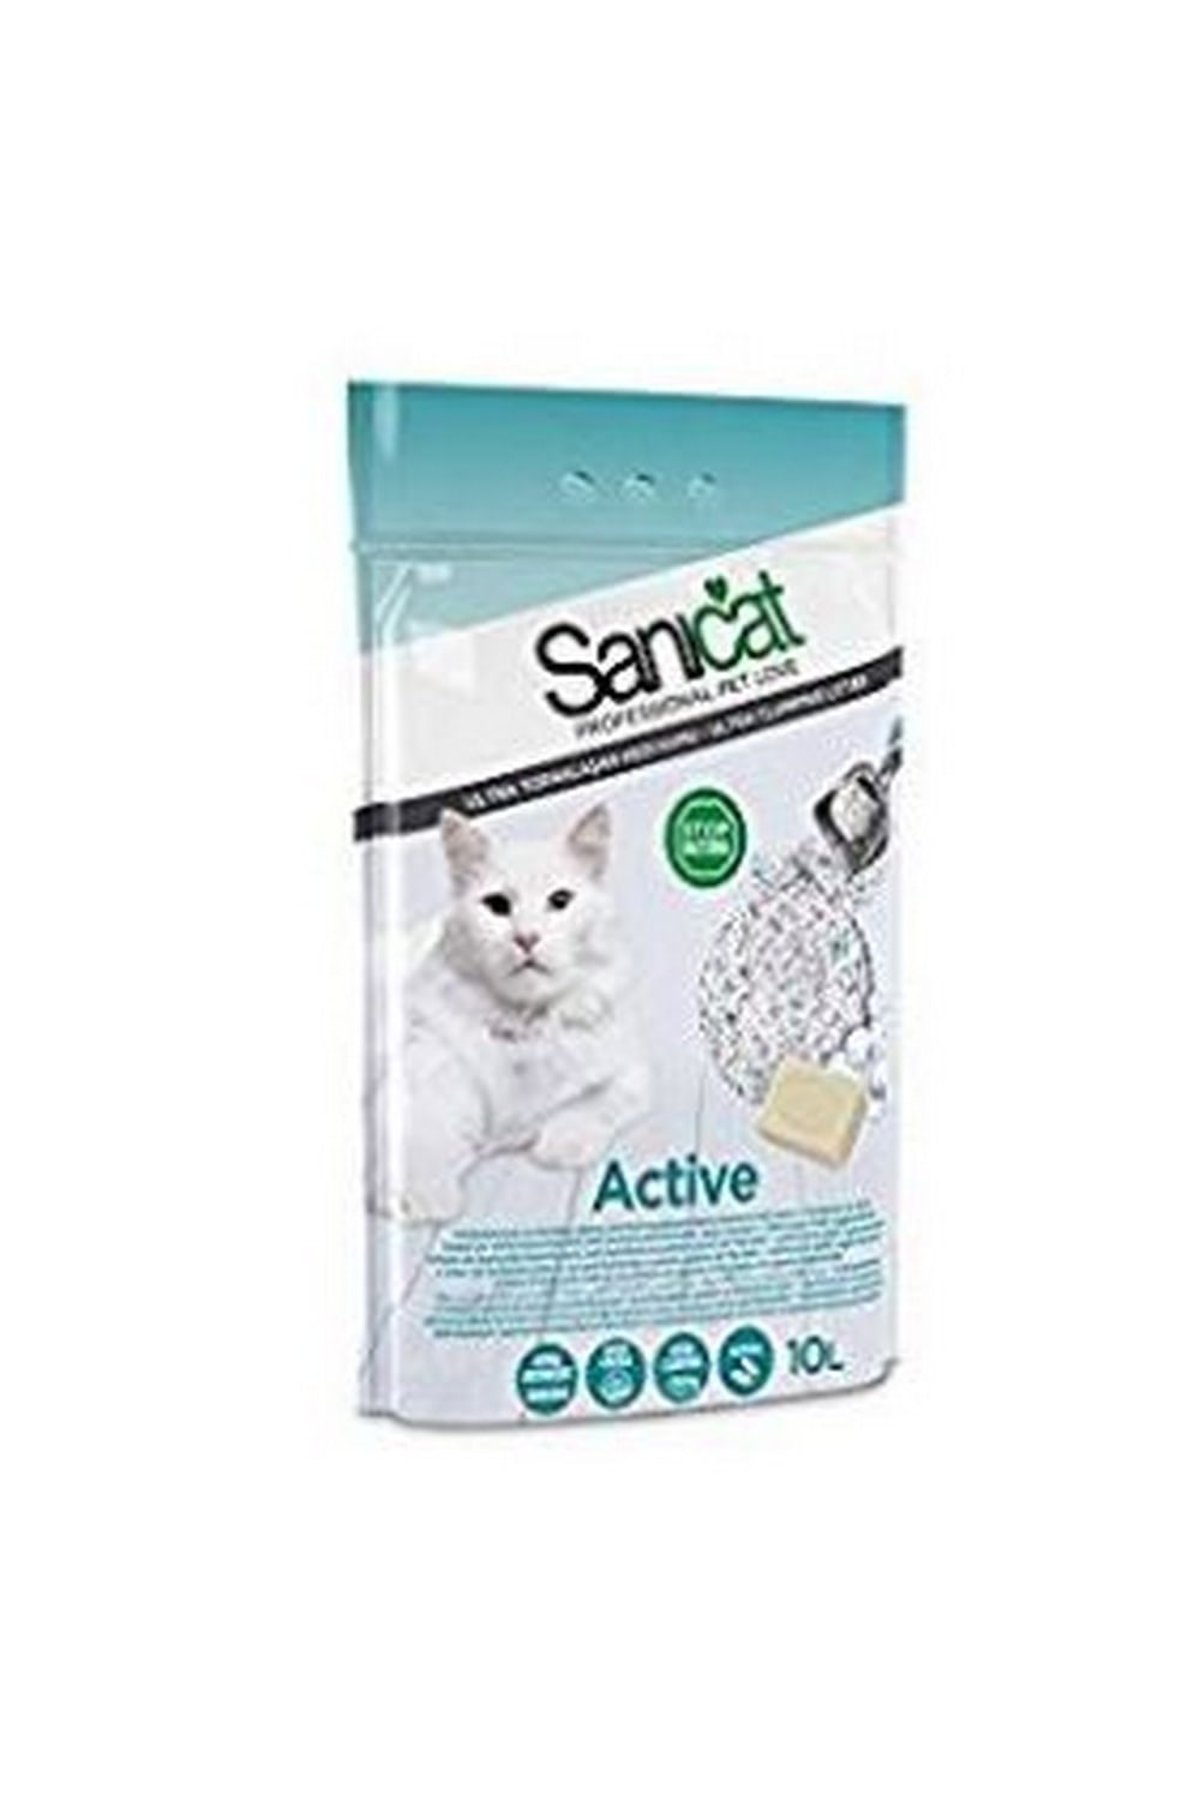 SANICAT ACTIVE CAT LITTER 10L 1X SCENTED MARSEILLE SOAP ~ CLUMPING ODOUR CONTROL 